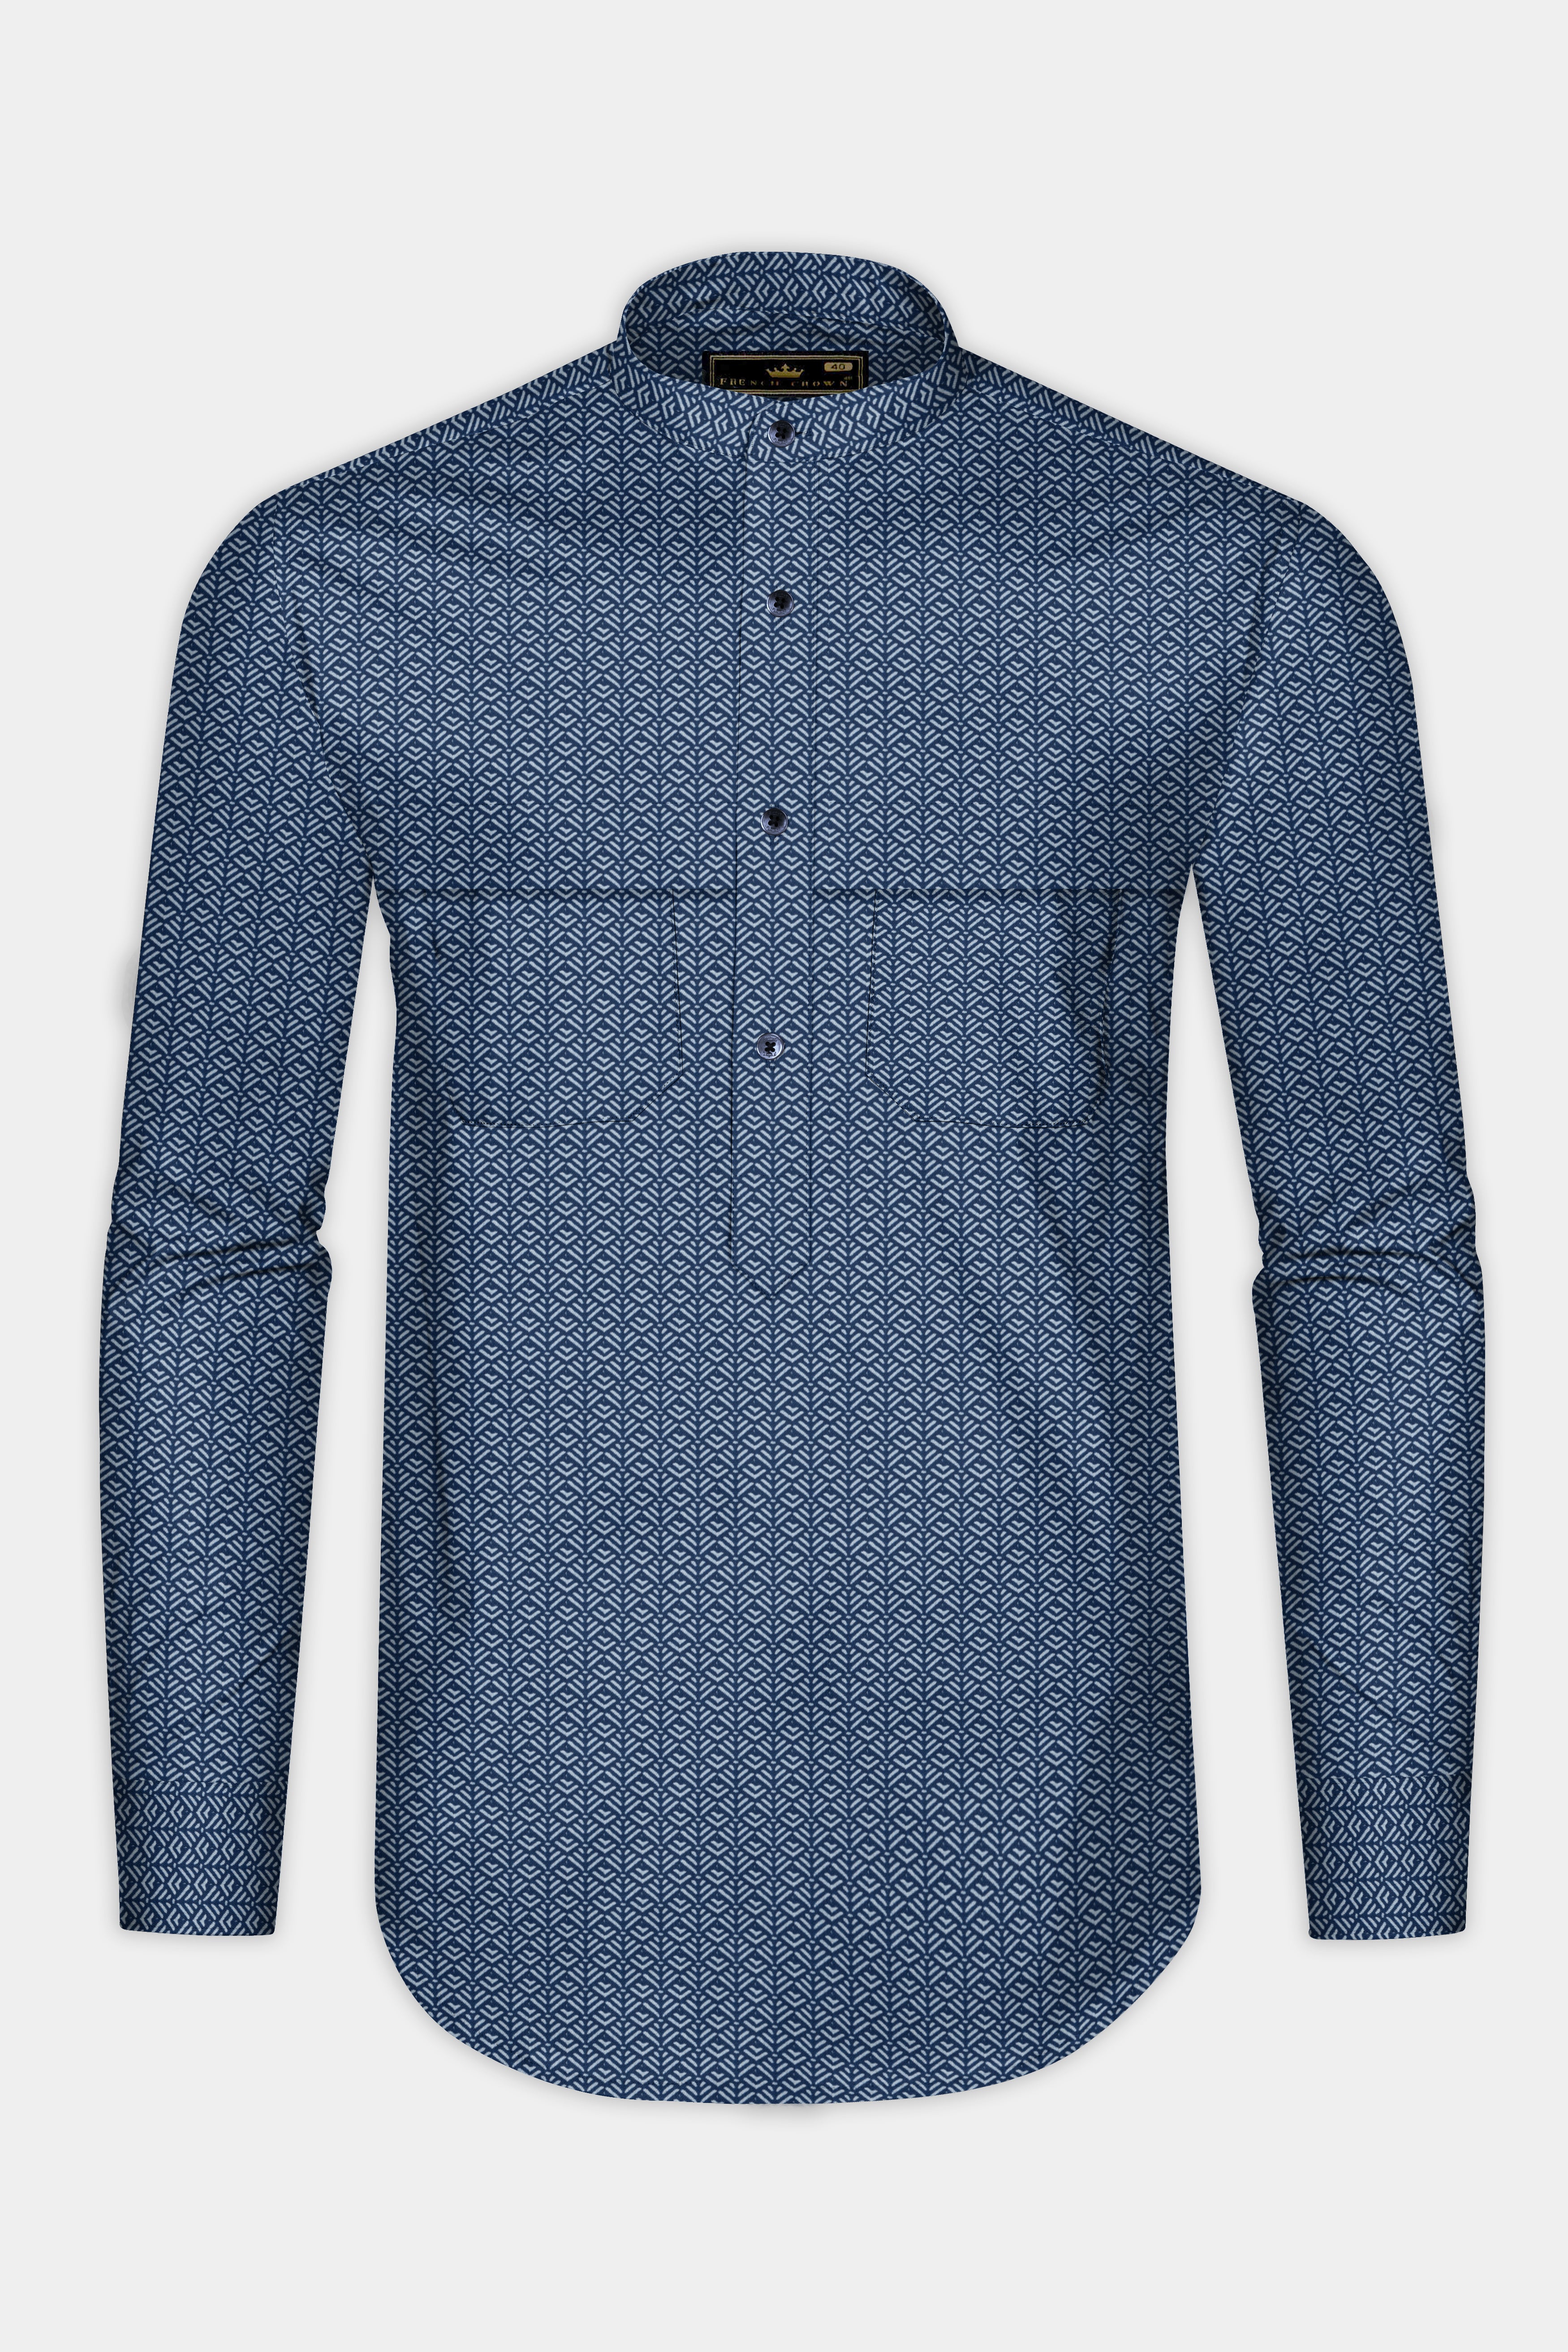 Haiti Blue Twill Prints Premium Cotton Shirt